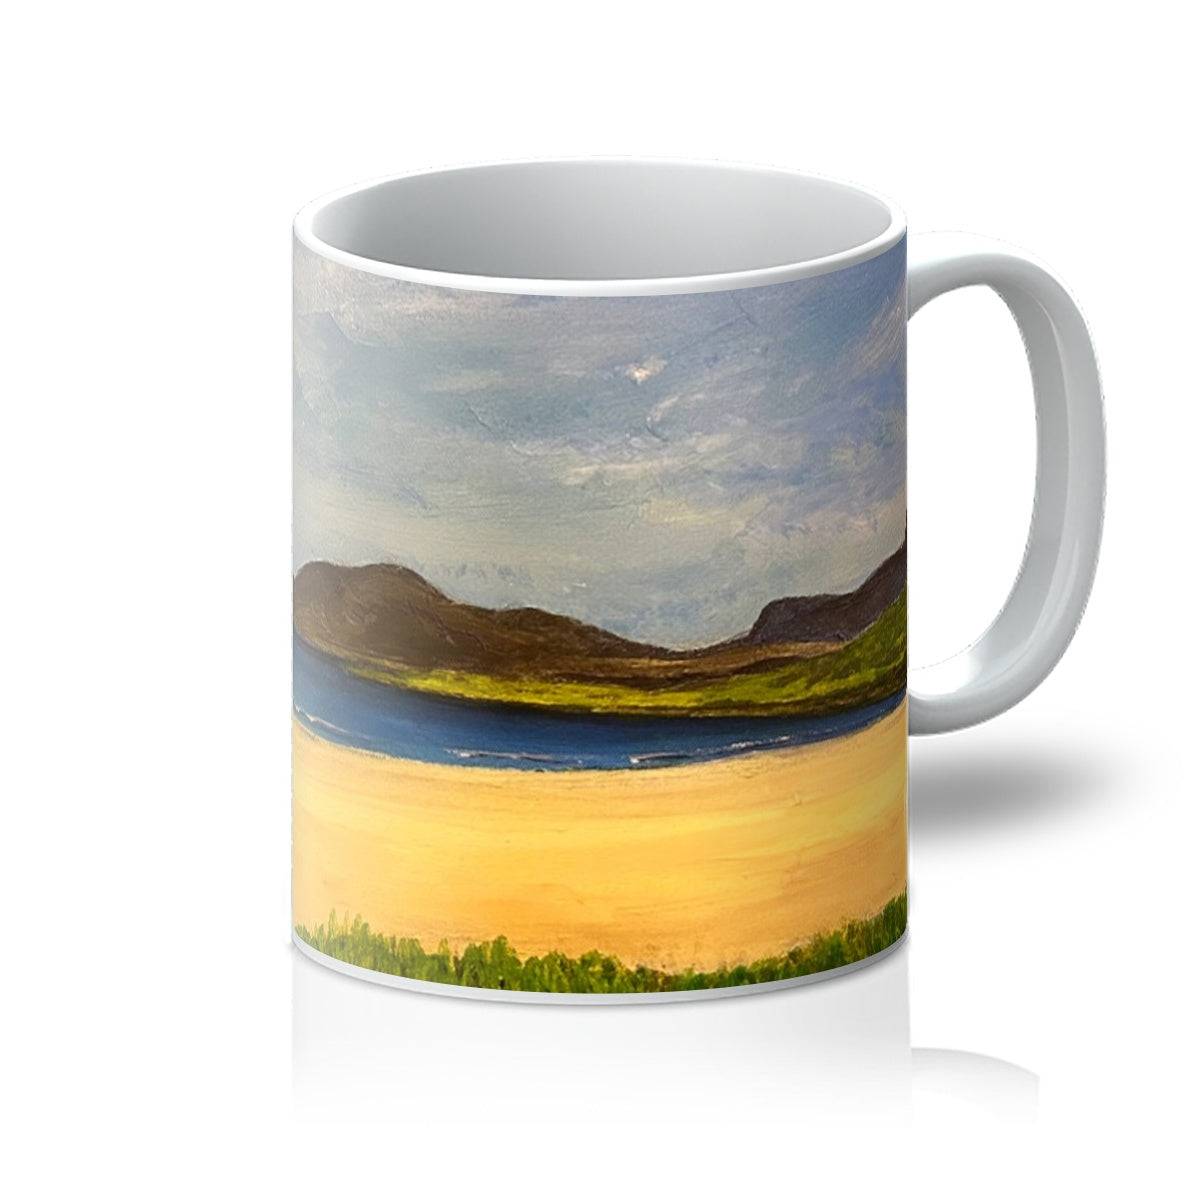 Luskentyre Beach Harris Art Gifts Mug-Mugs-Hebridean Islands Art Gallery-11oz-White-Paintings, Prints, Homeware, Art Gifts From Scotland By Scottish Artist Kevin Hunter